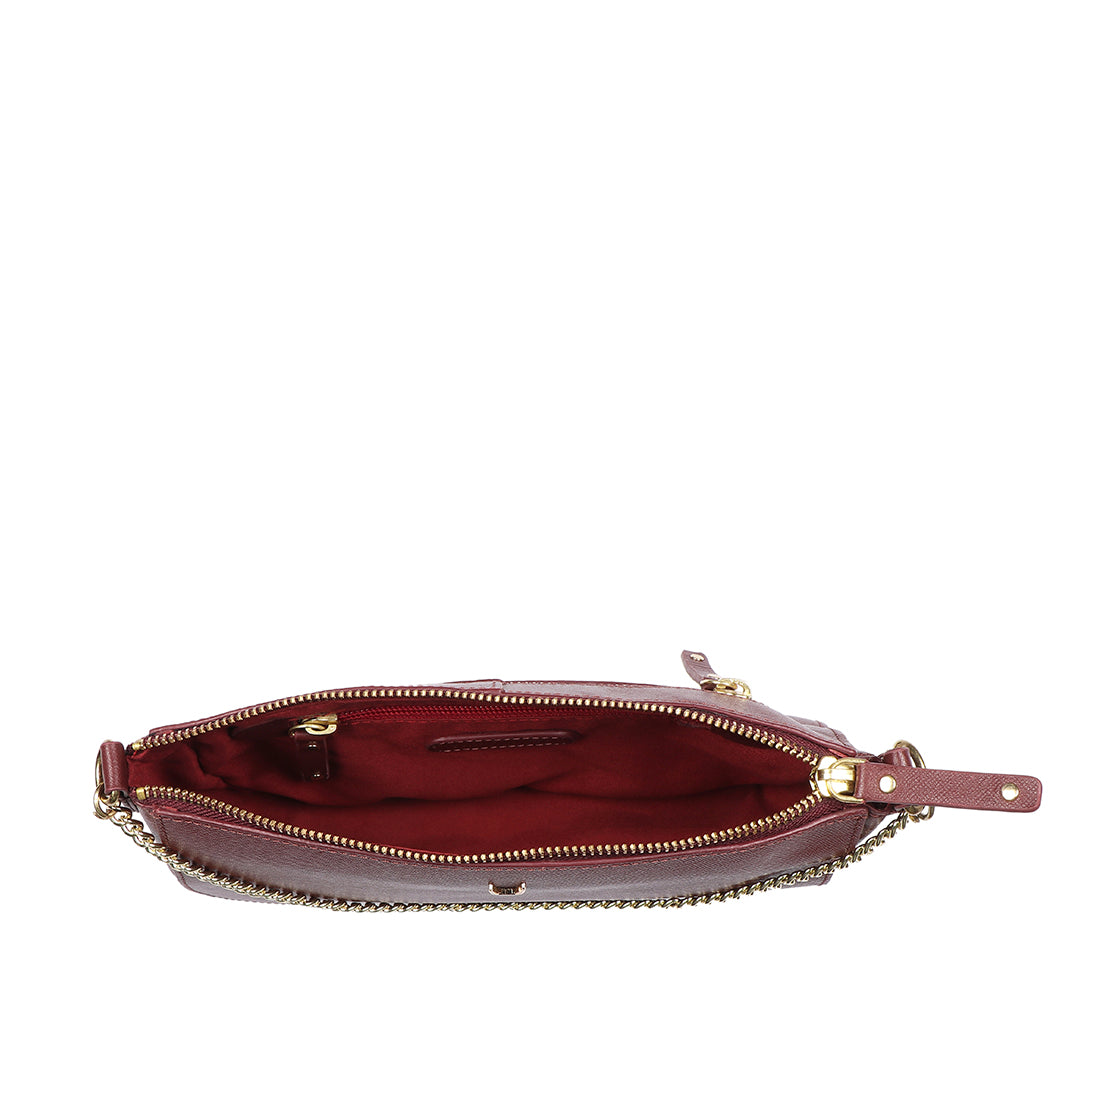 Buy Red Valerie 02 Bucket Bag Online - Hidesign